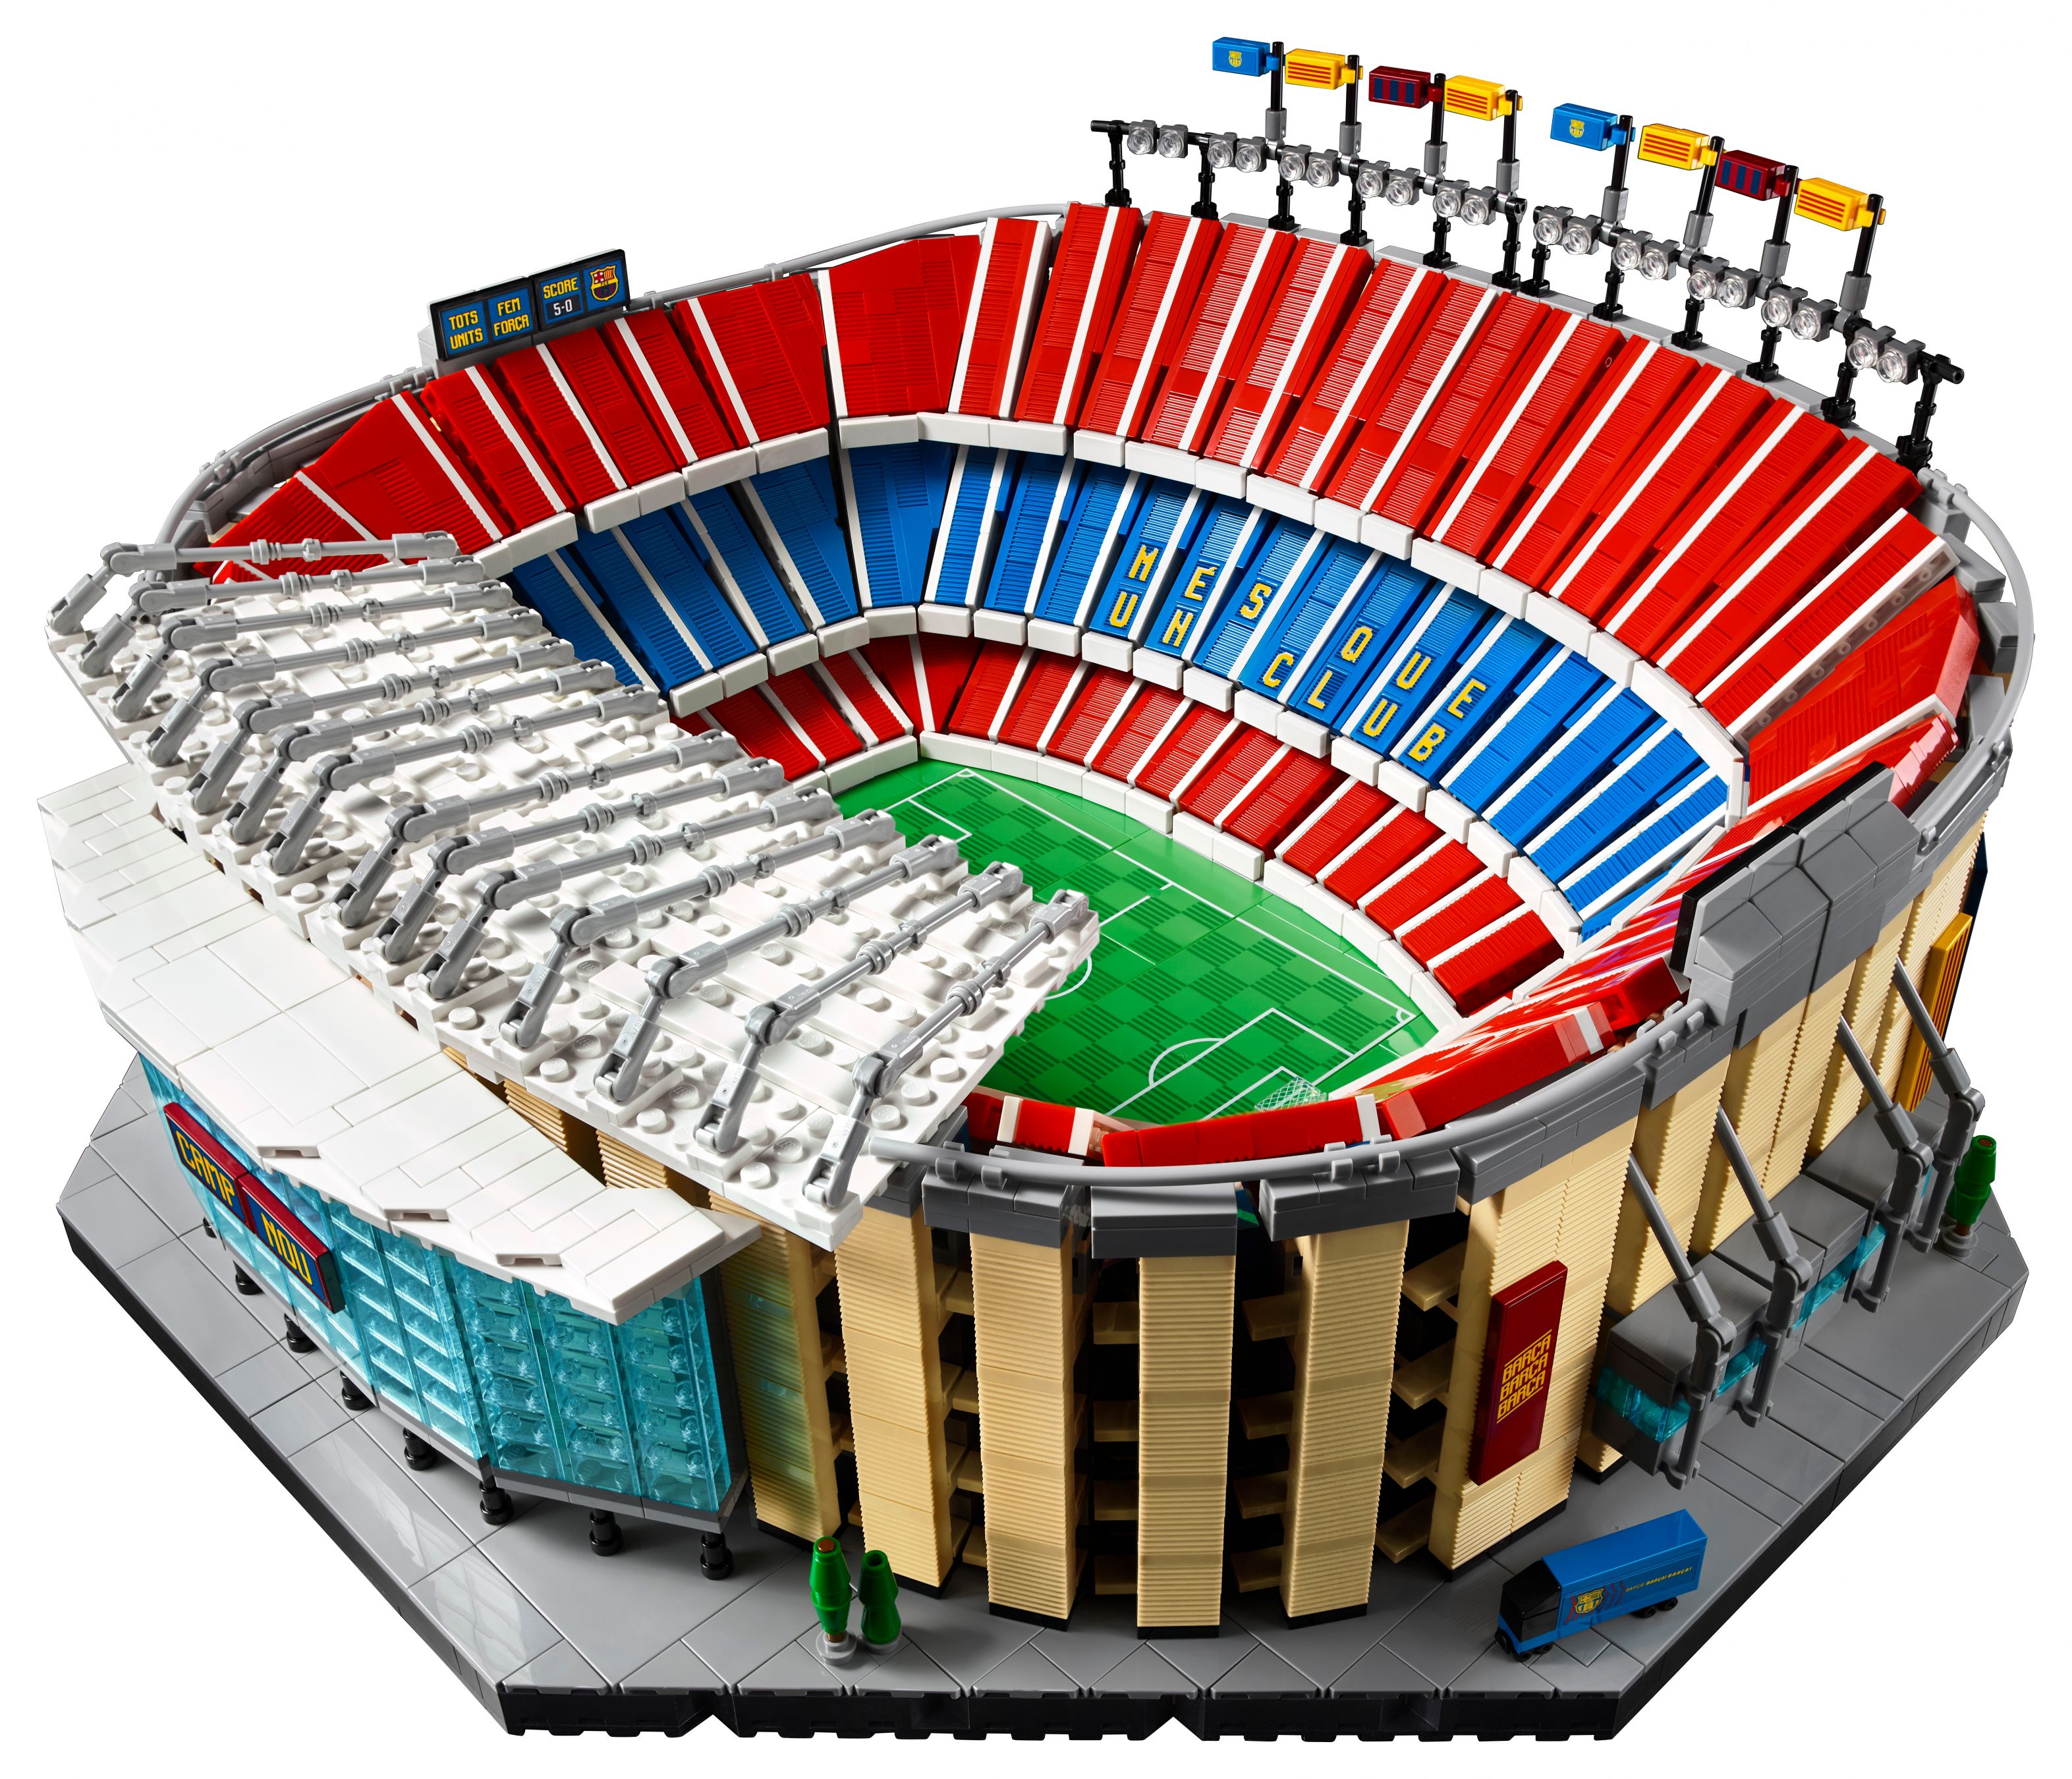 LEGO Advanced Models 10284 Camp Nou – FC Barcelona LEGO_10284_alt2.jpg